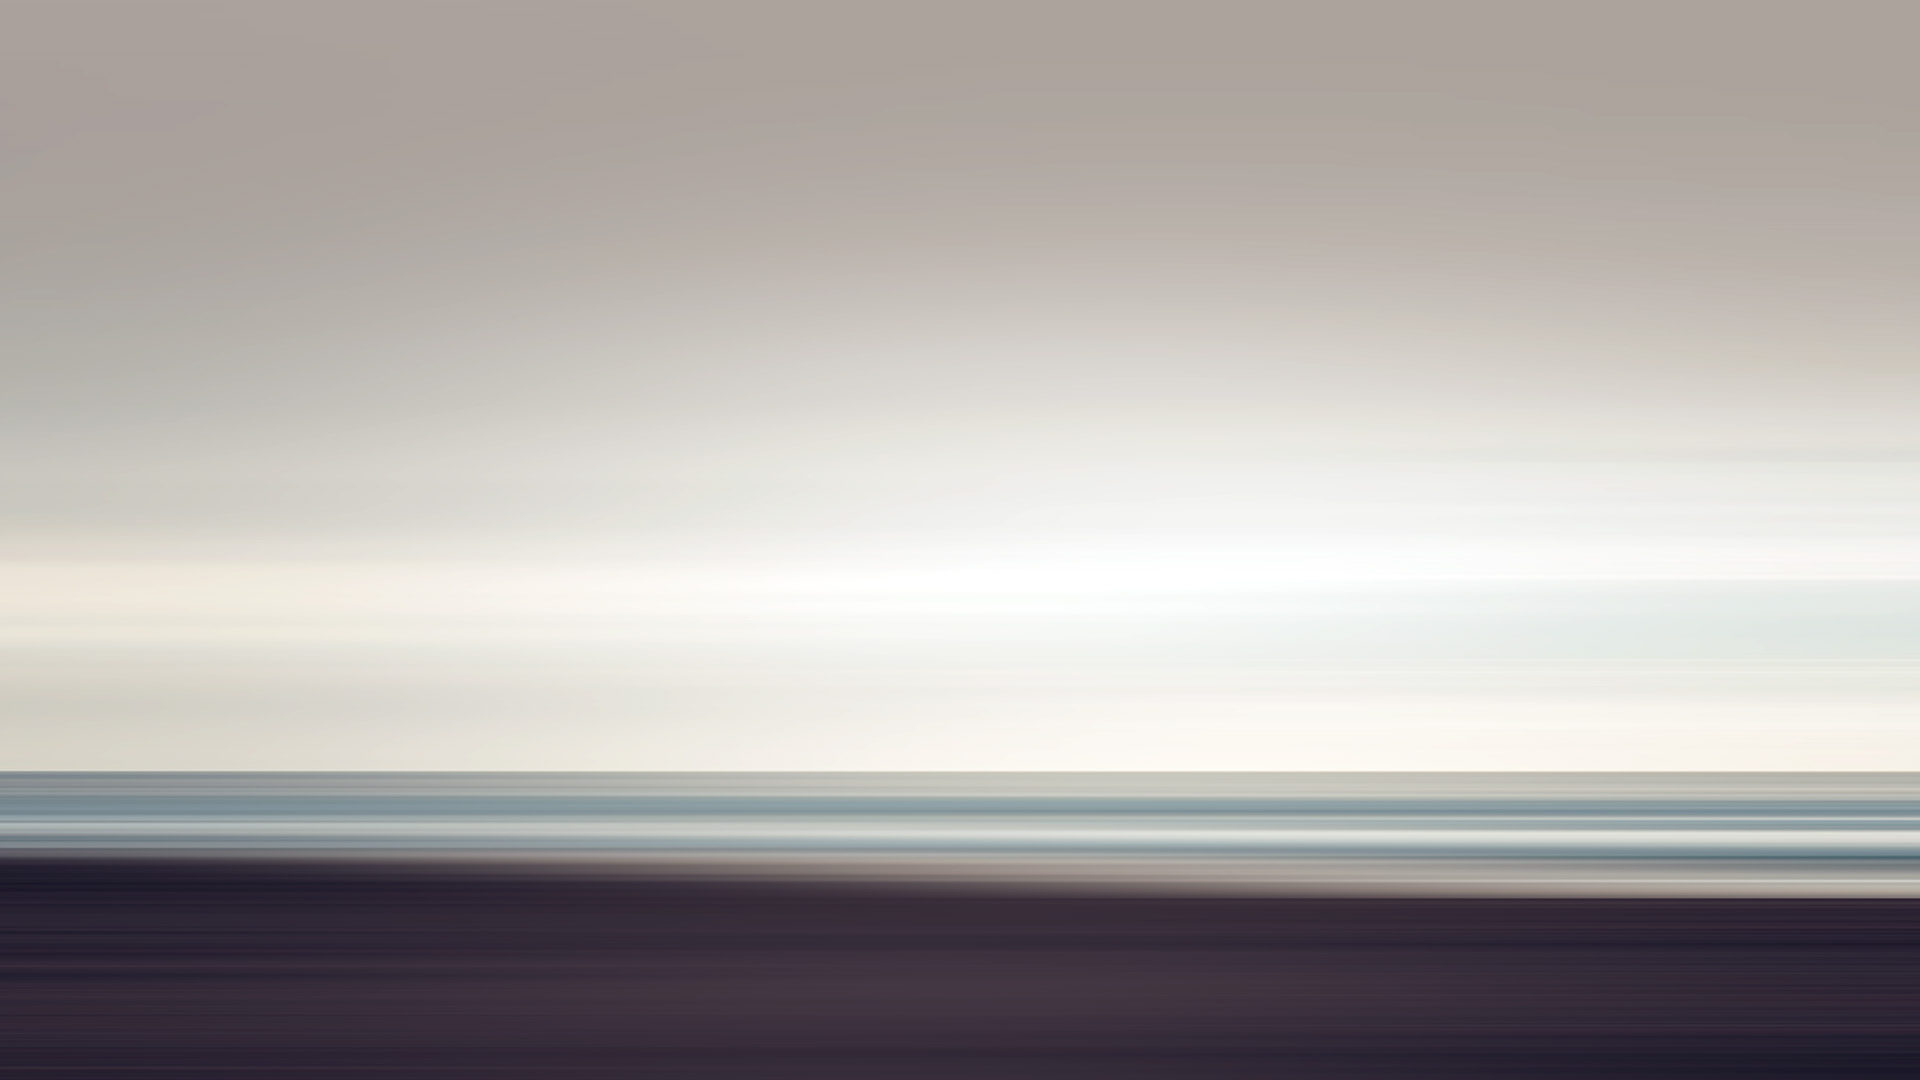 Horizonal Motion Blur Scan Lines Desktop Wallpaper